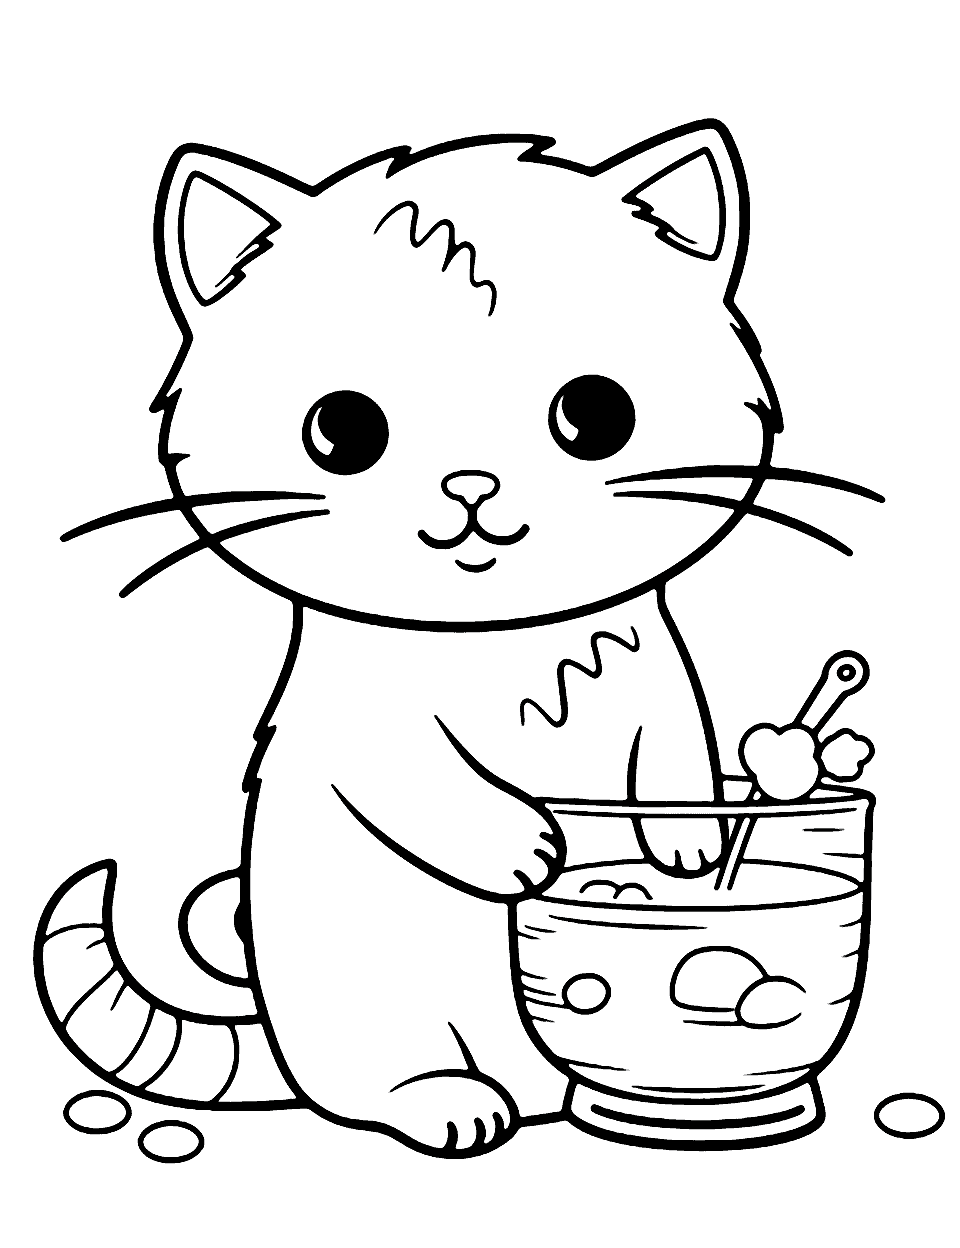 Kawaii Cat Drinking Bubble Tea Coloring Page - A cute, chubby cat enjoying a refreshing bubble tea.